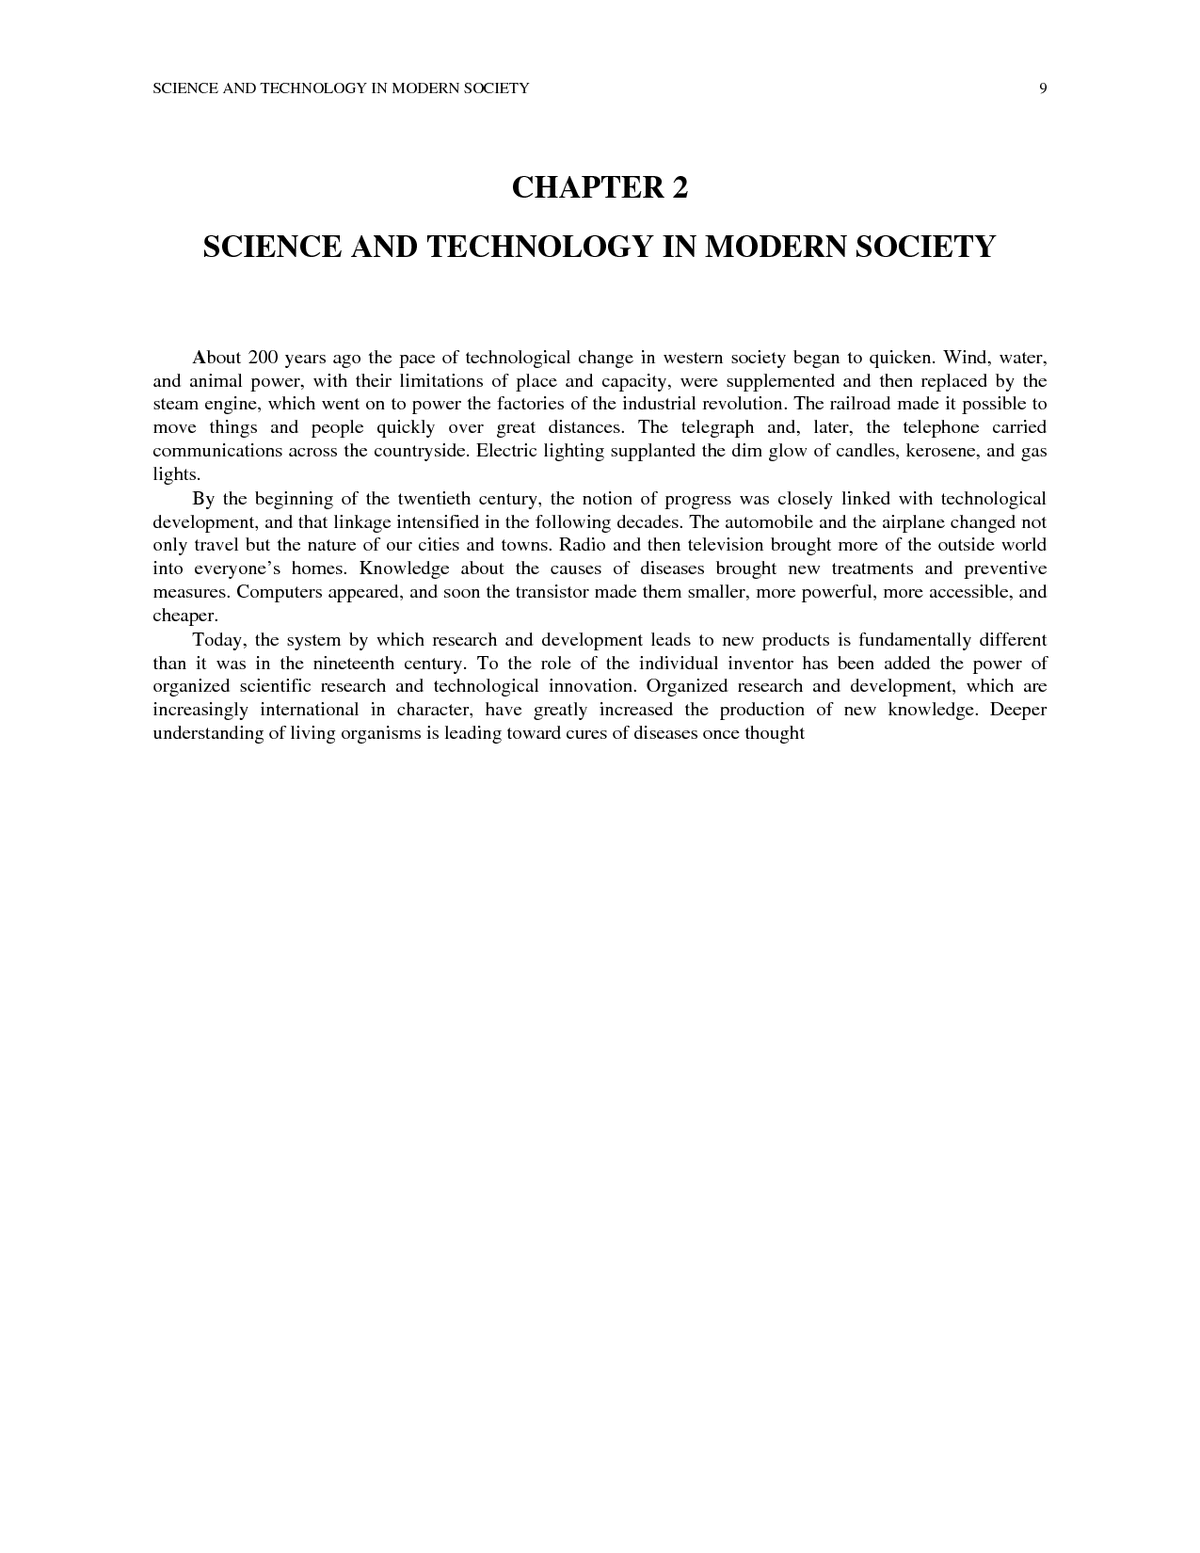 Modern technology essays